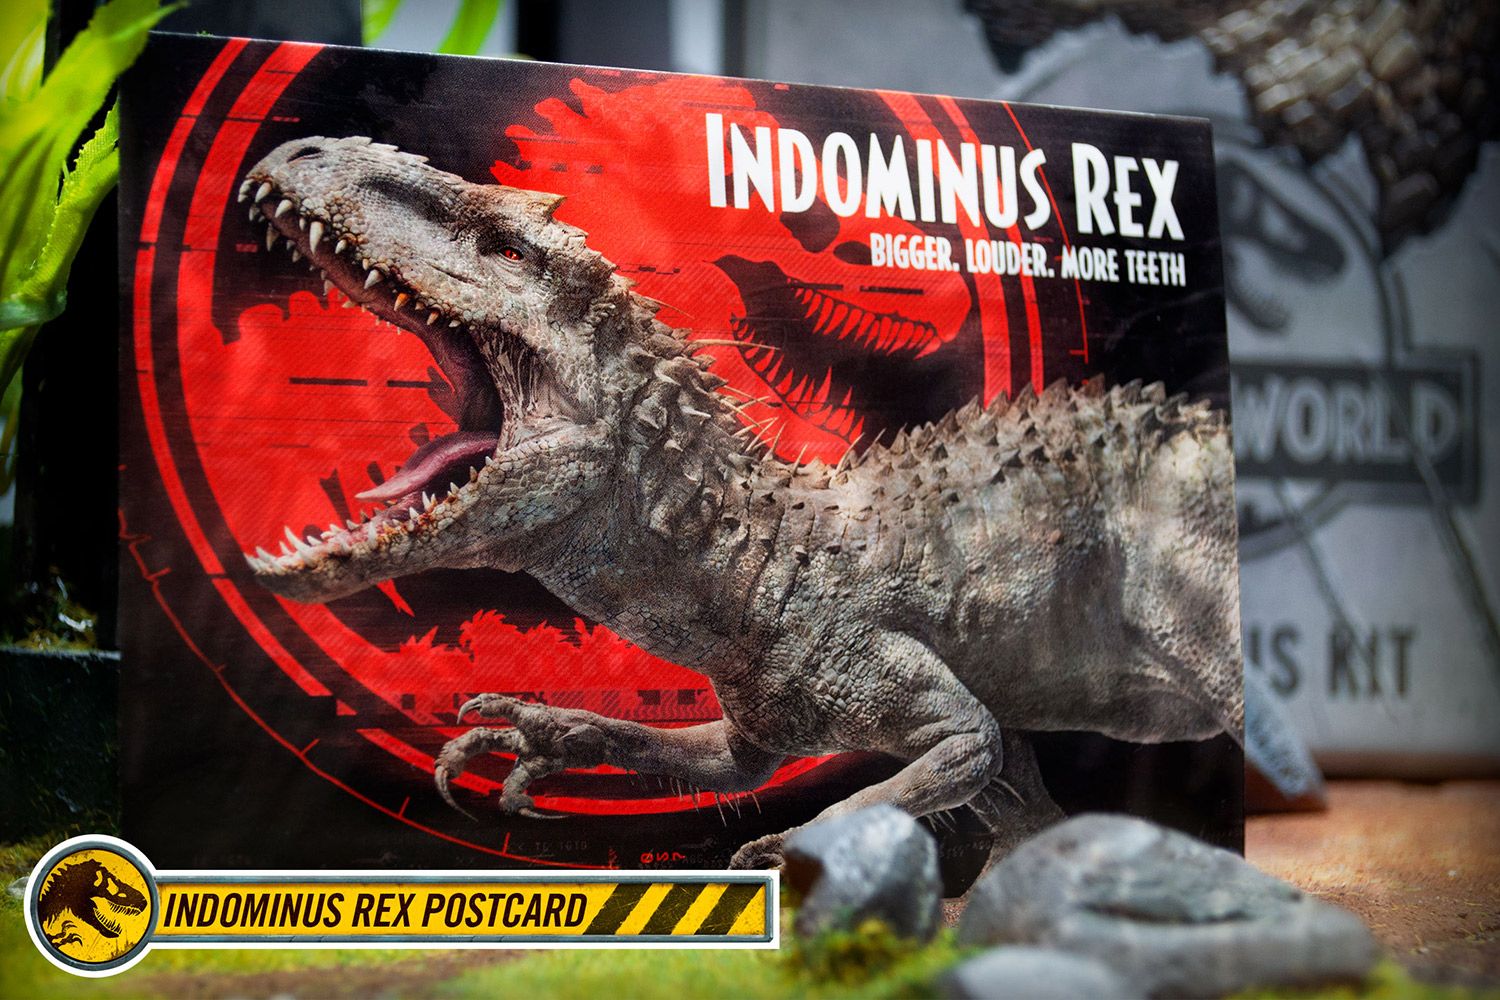 Universal Studios Jurassic World Indominus Rex Bigger Louder More Teeth Pin New 